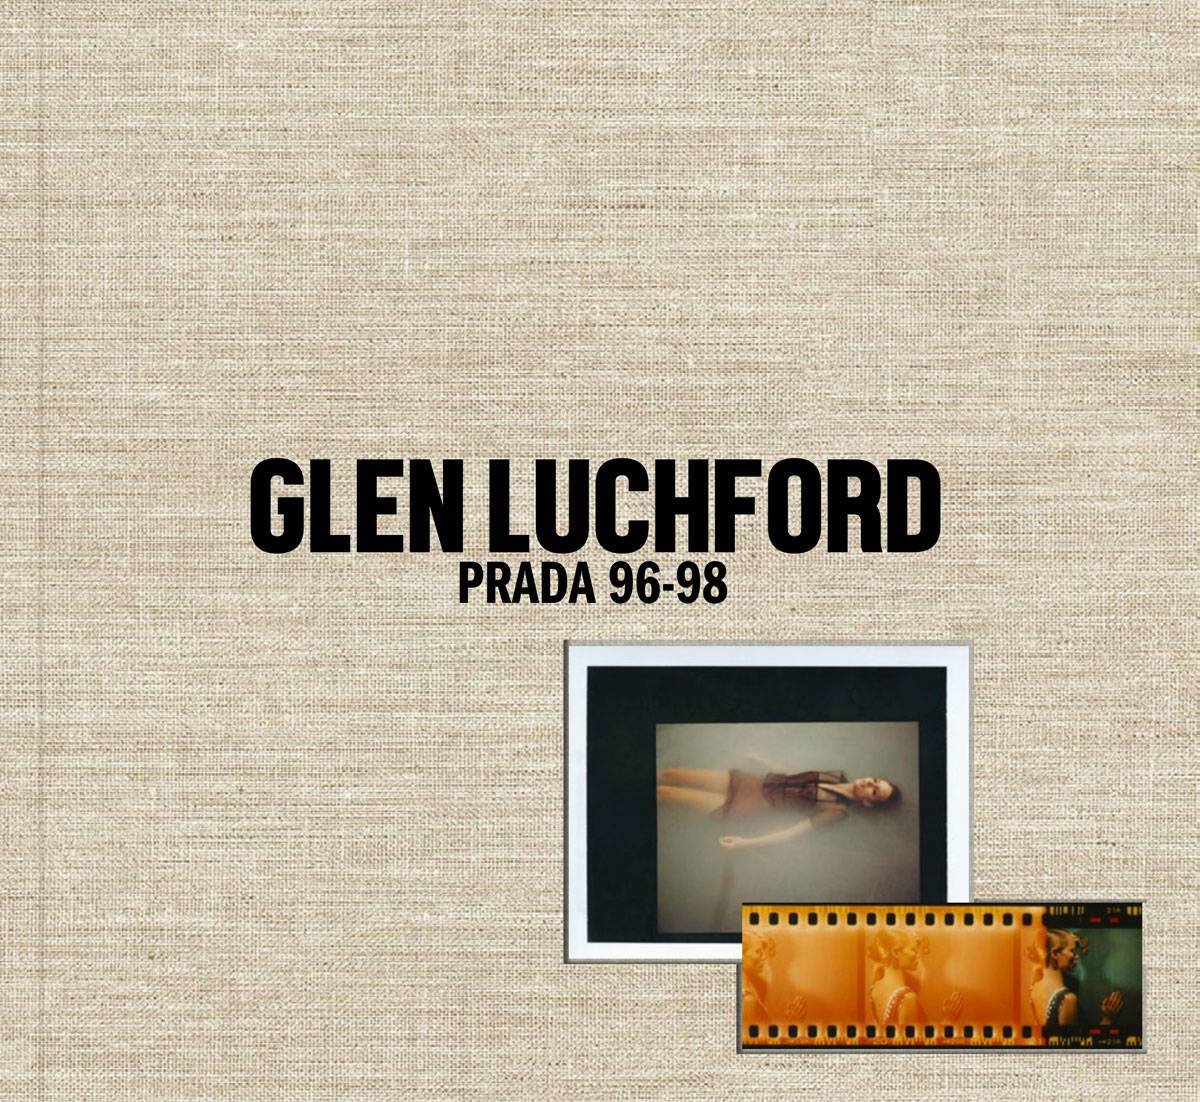 Glen Luchford, Prada 96-98 (Fot. materiały prasowe)